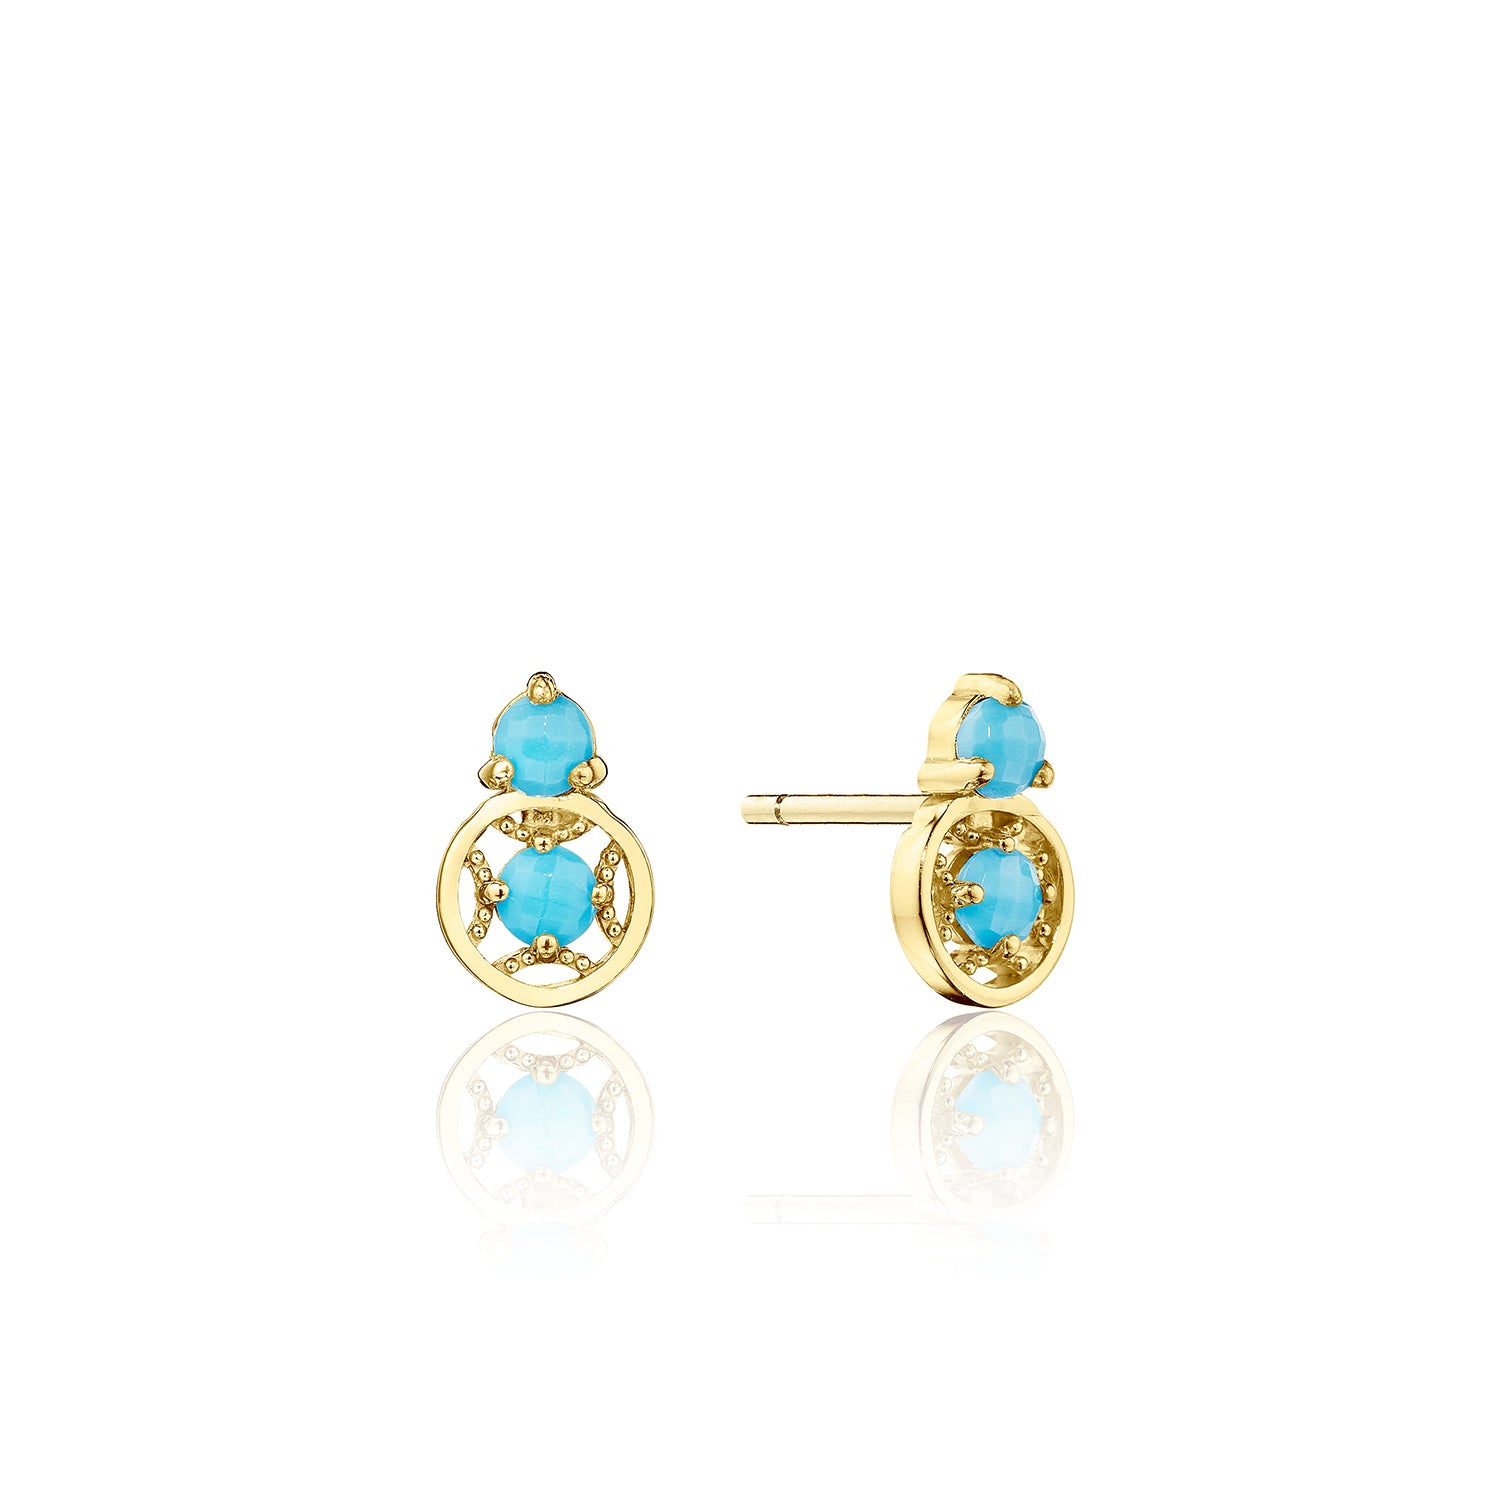 Tacori Petite Gemstone Earrings with Turquoise